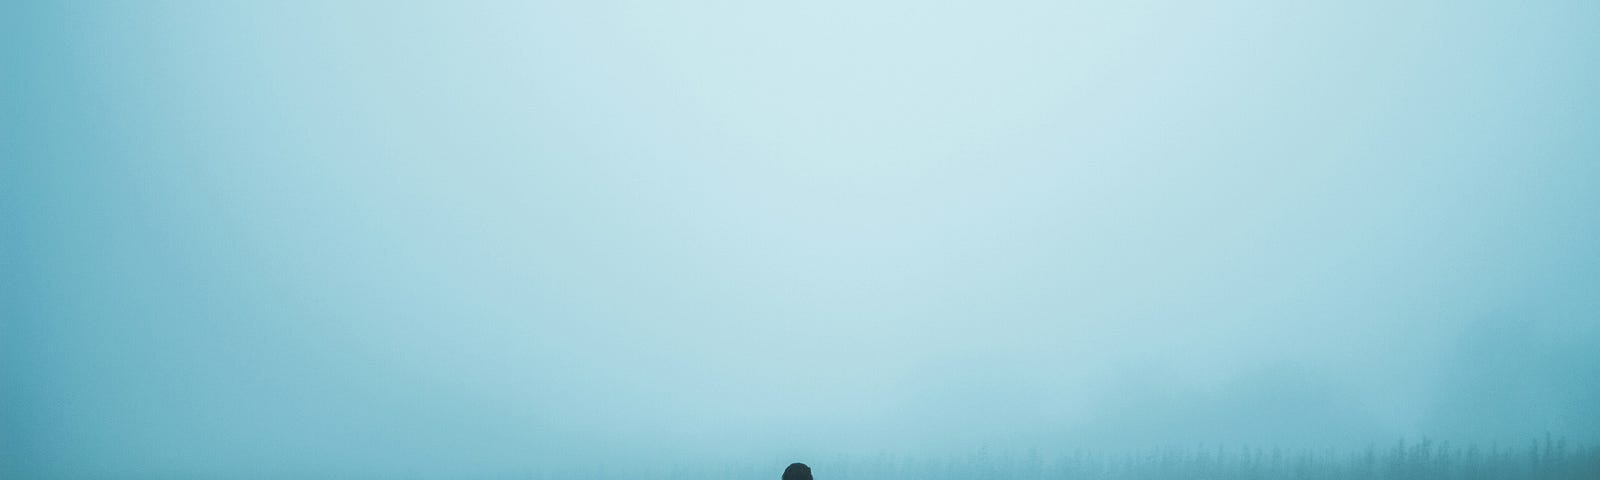 A figure vaguely seen among fog or cloud